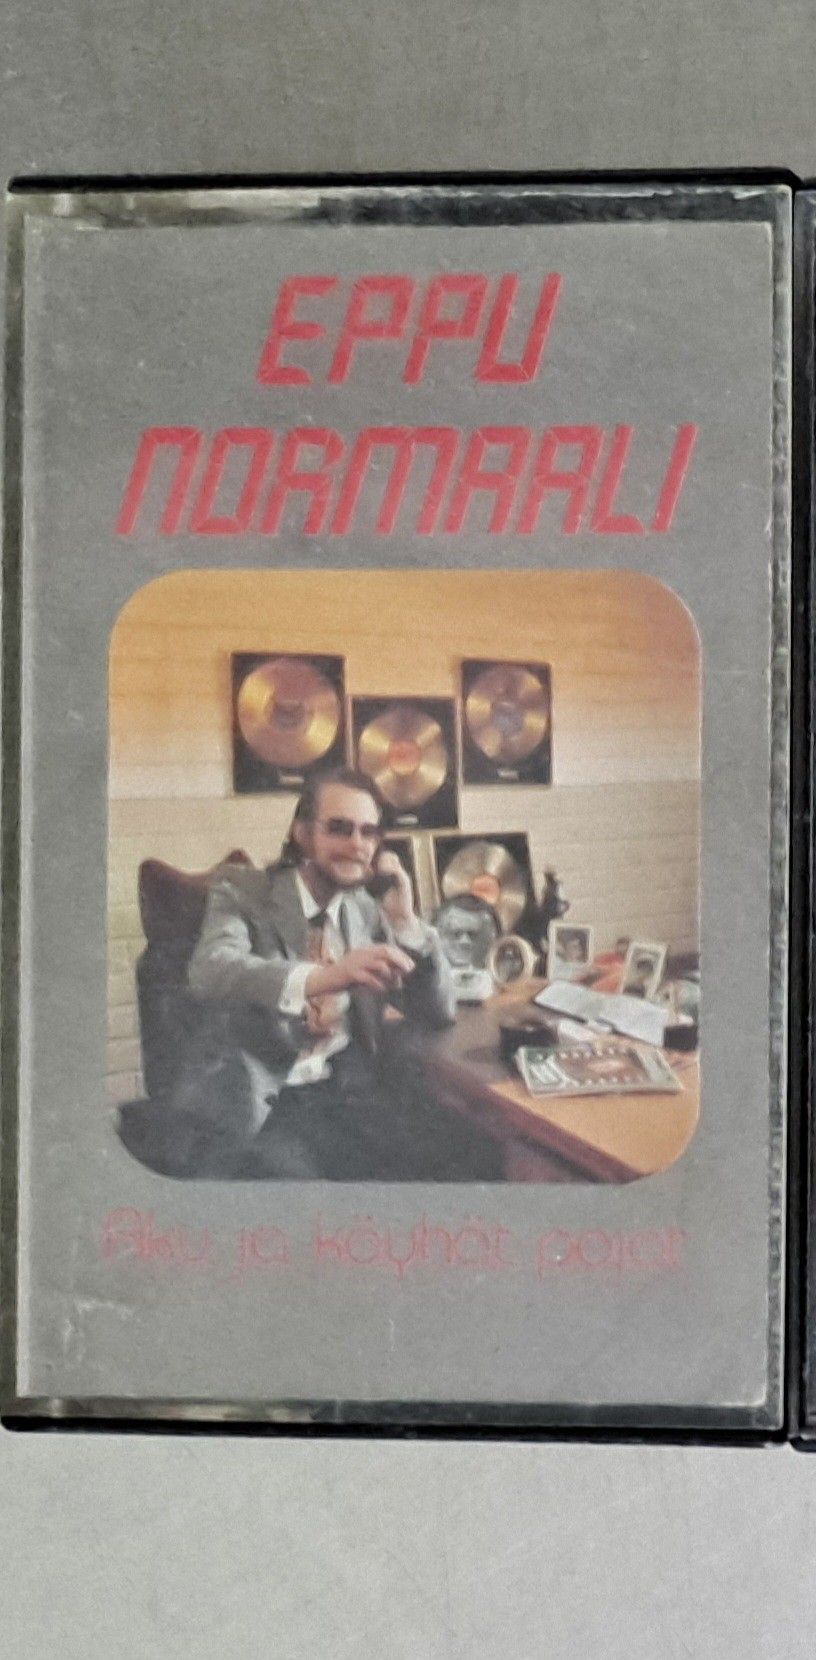 Eppu Normaali c-kasetti